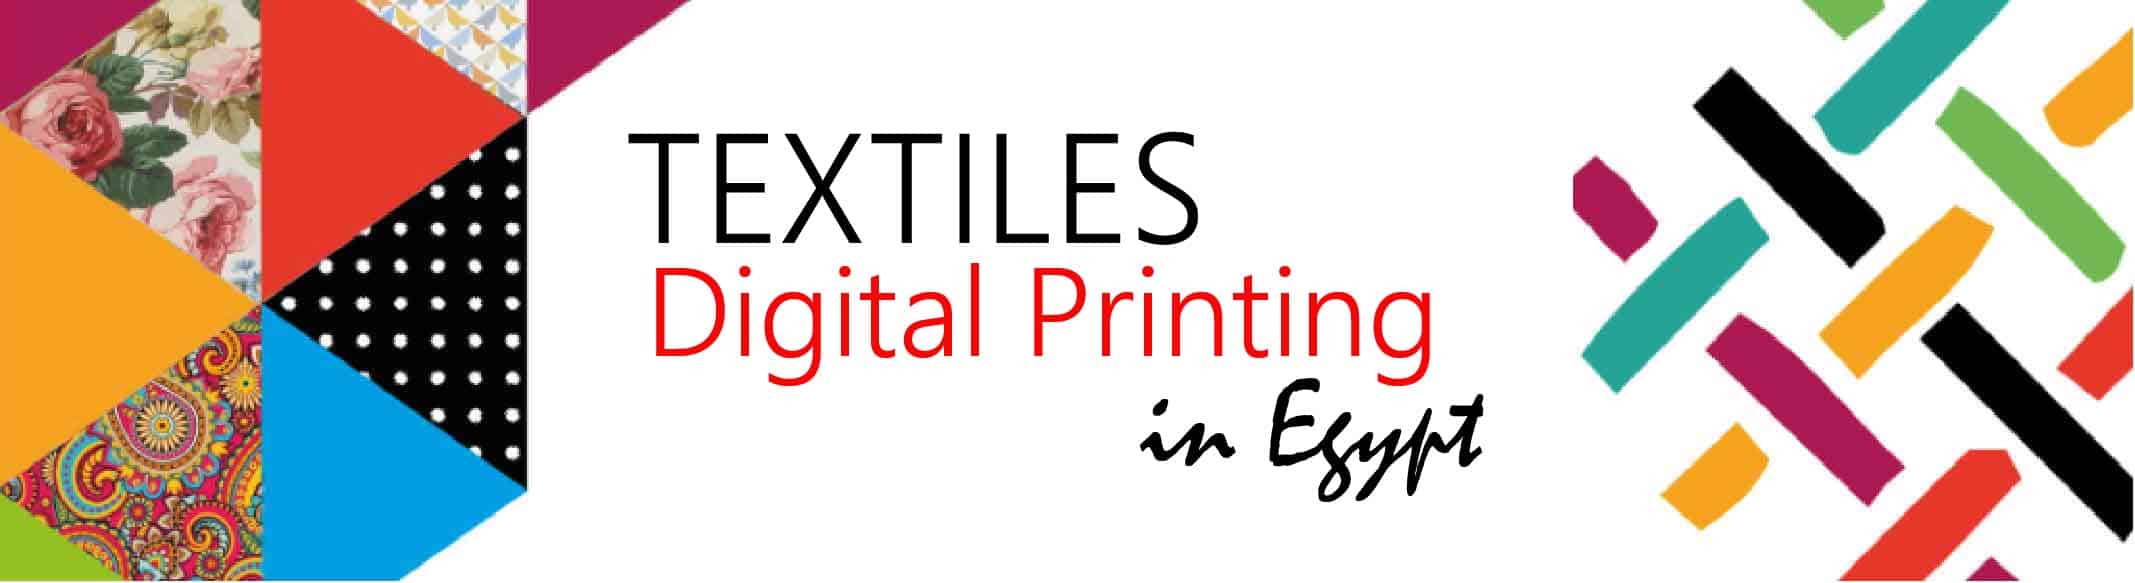 Textiles-Digital Printing-Egypt-Scribe-ITEX CAIRO